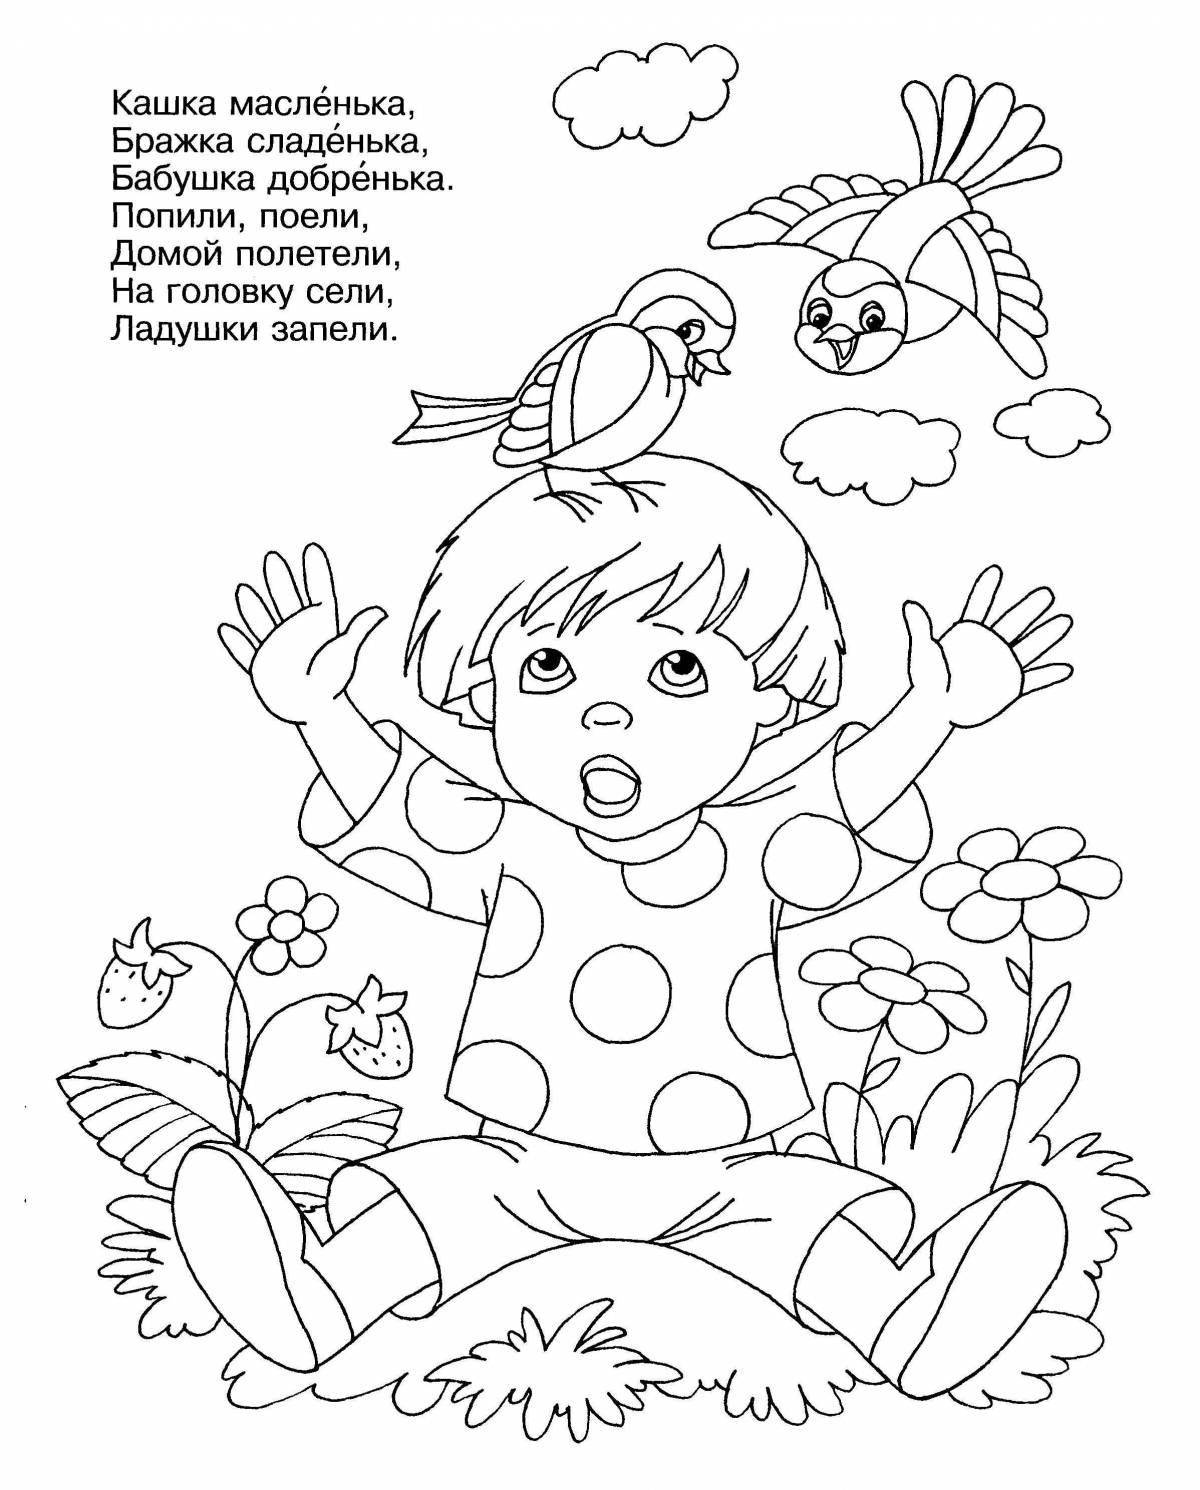 For preschoolers based on barto poetry #8